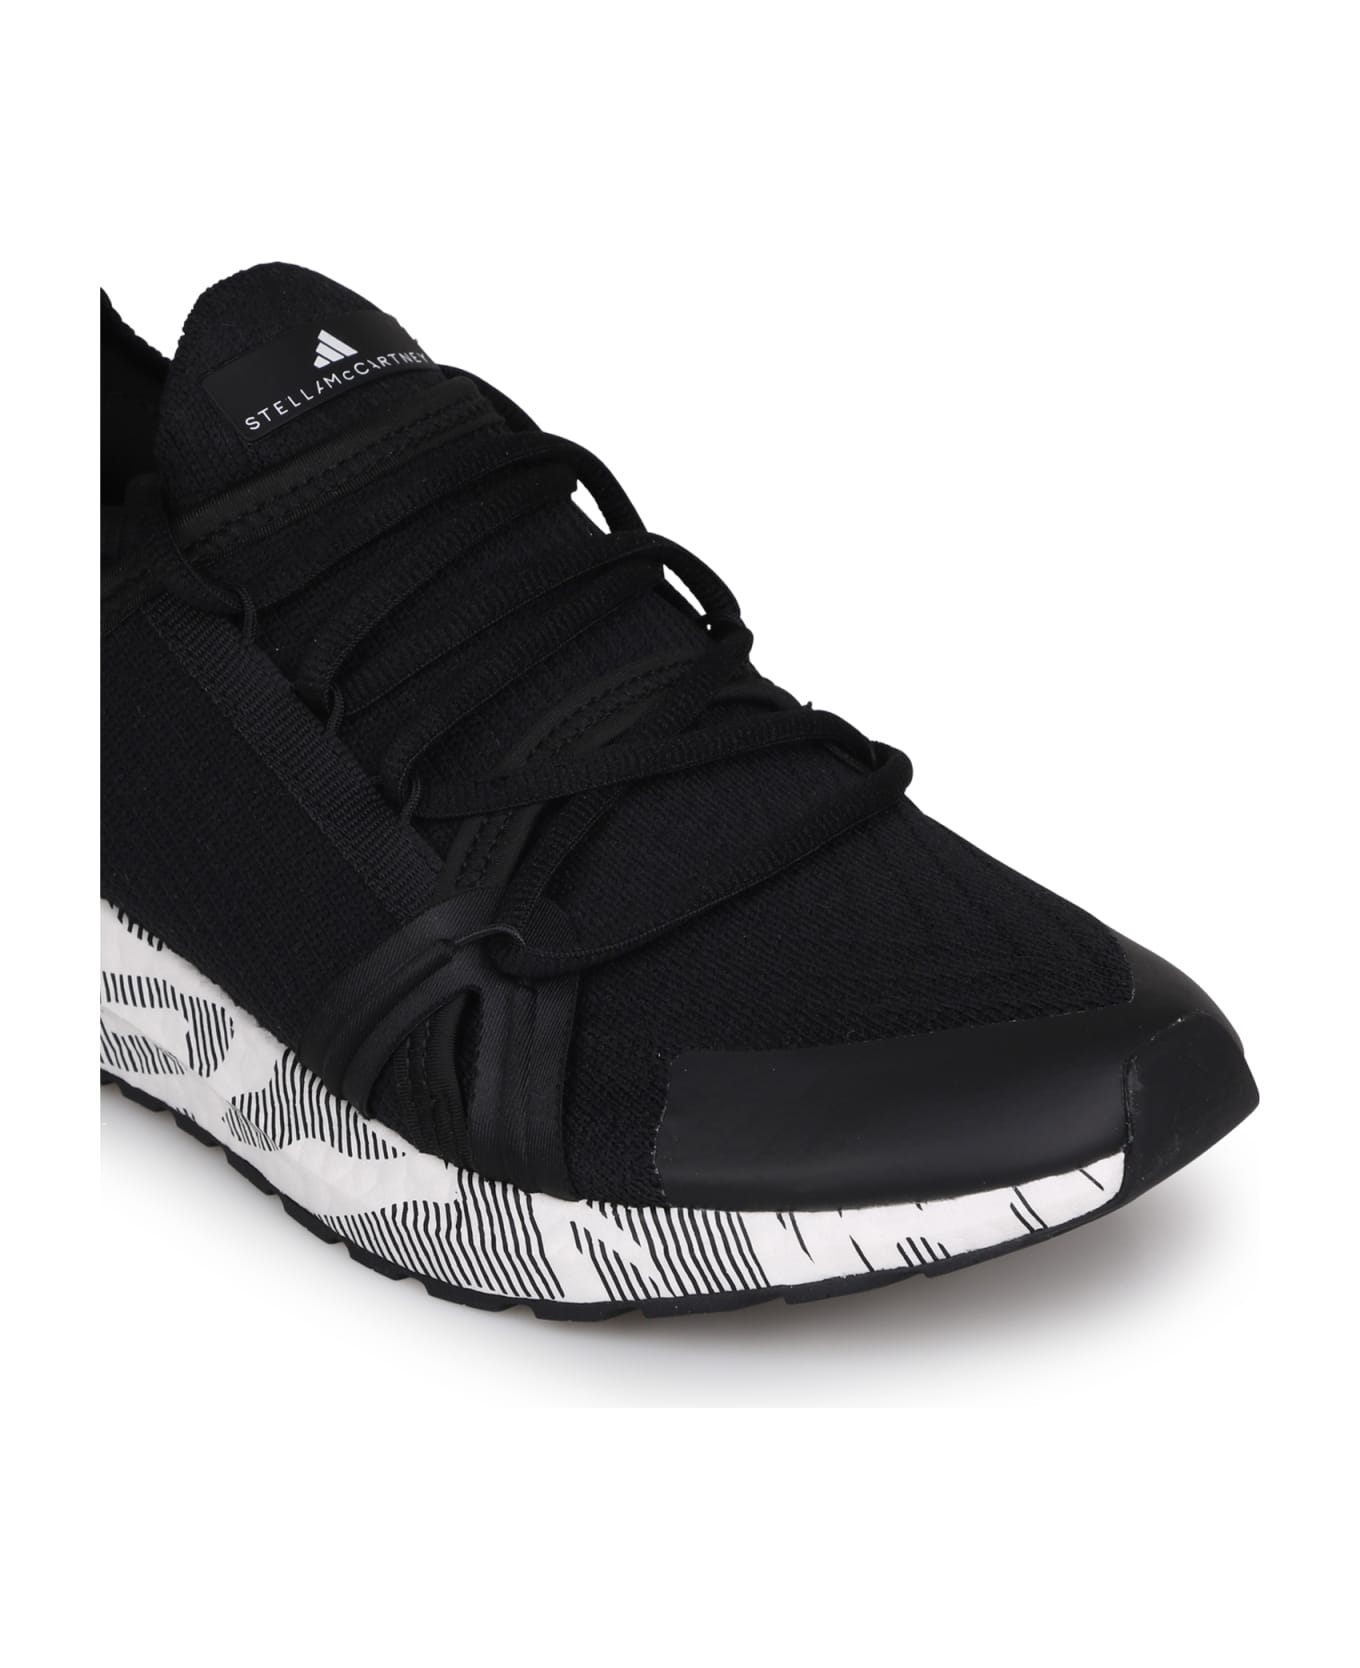 Adidas by Stella McCartney Ultraboost 20 Low-top Sneakers